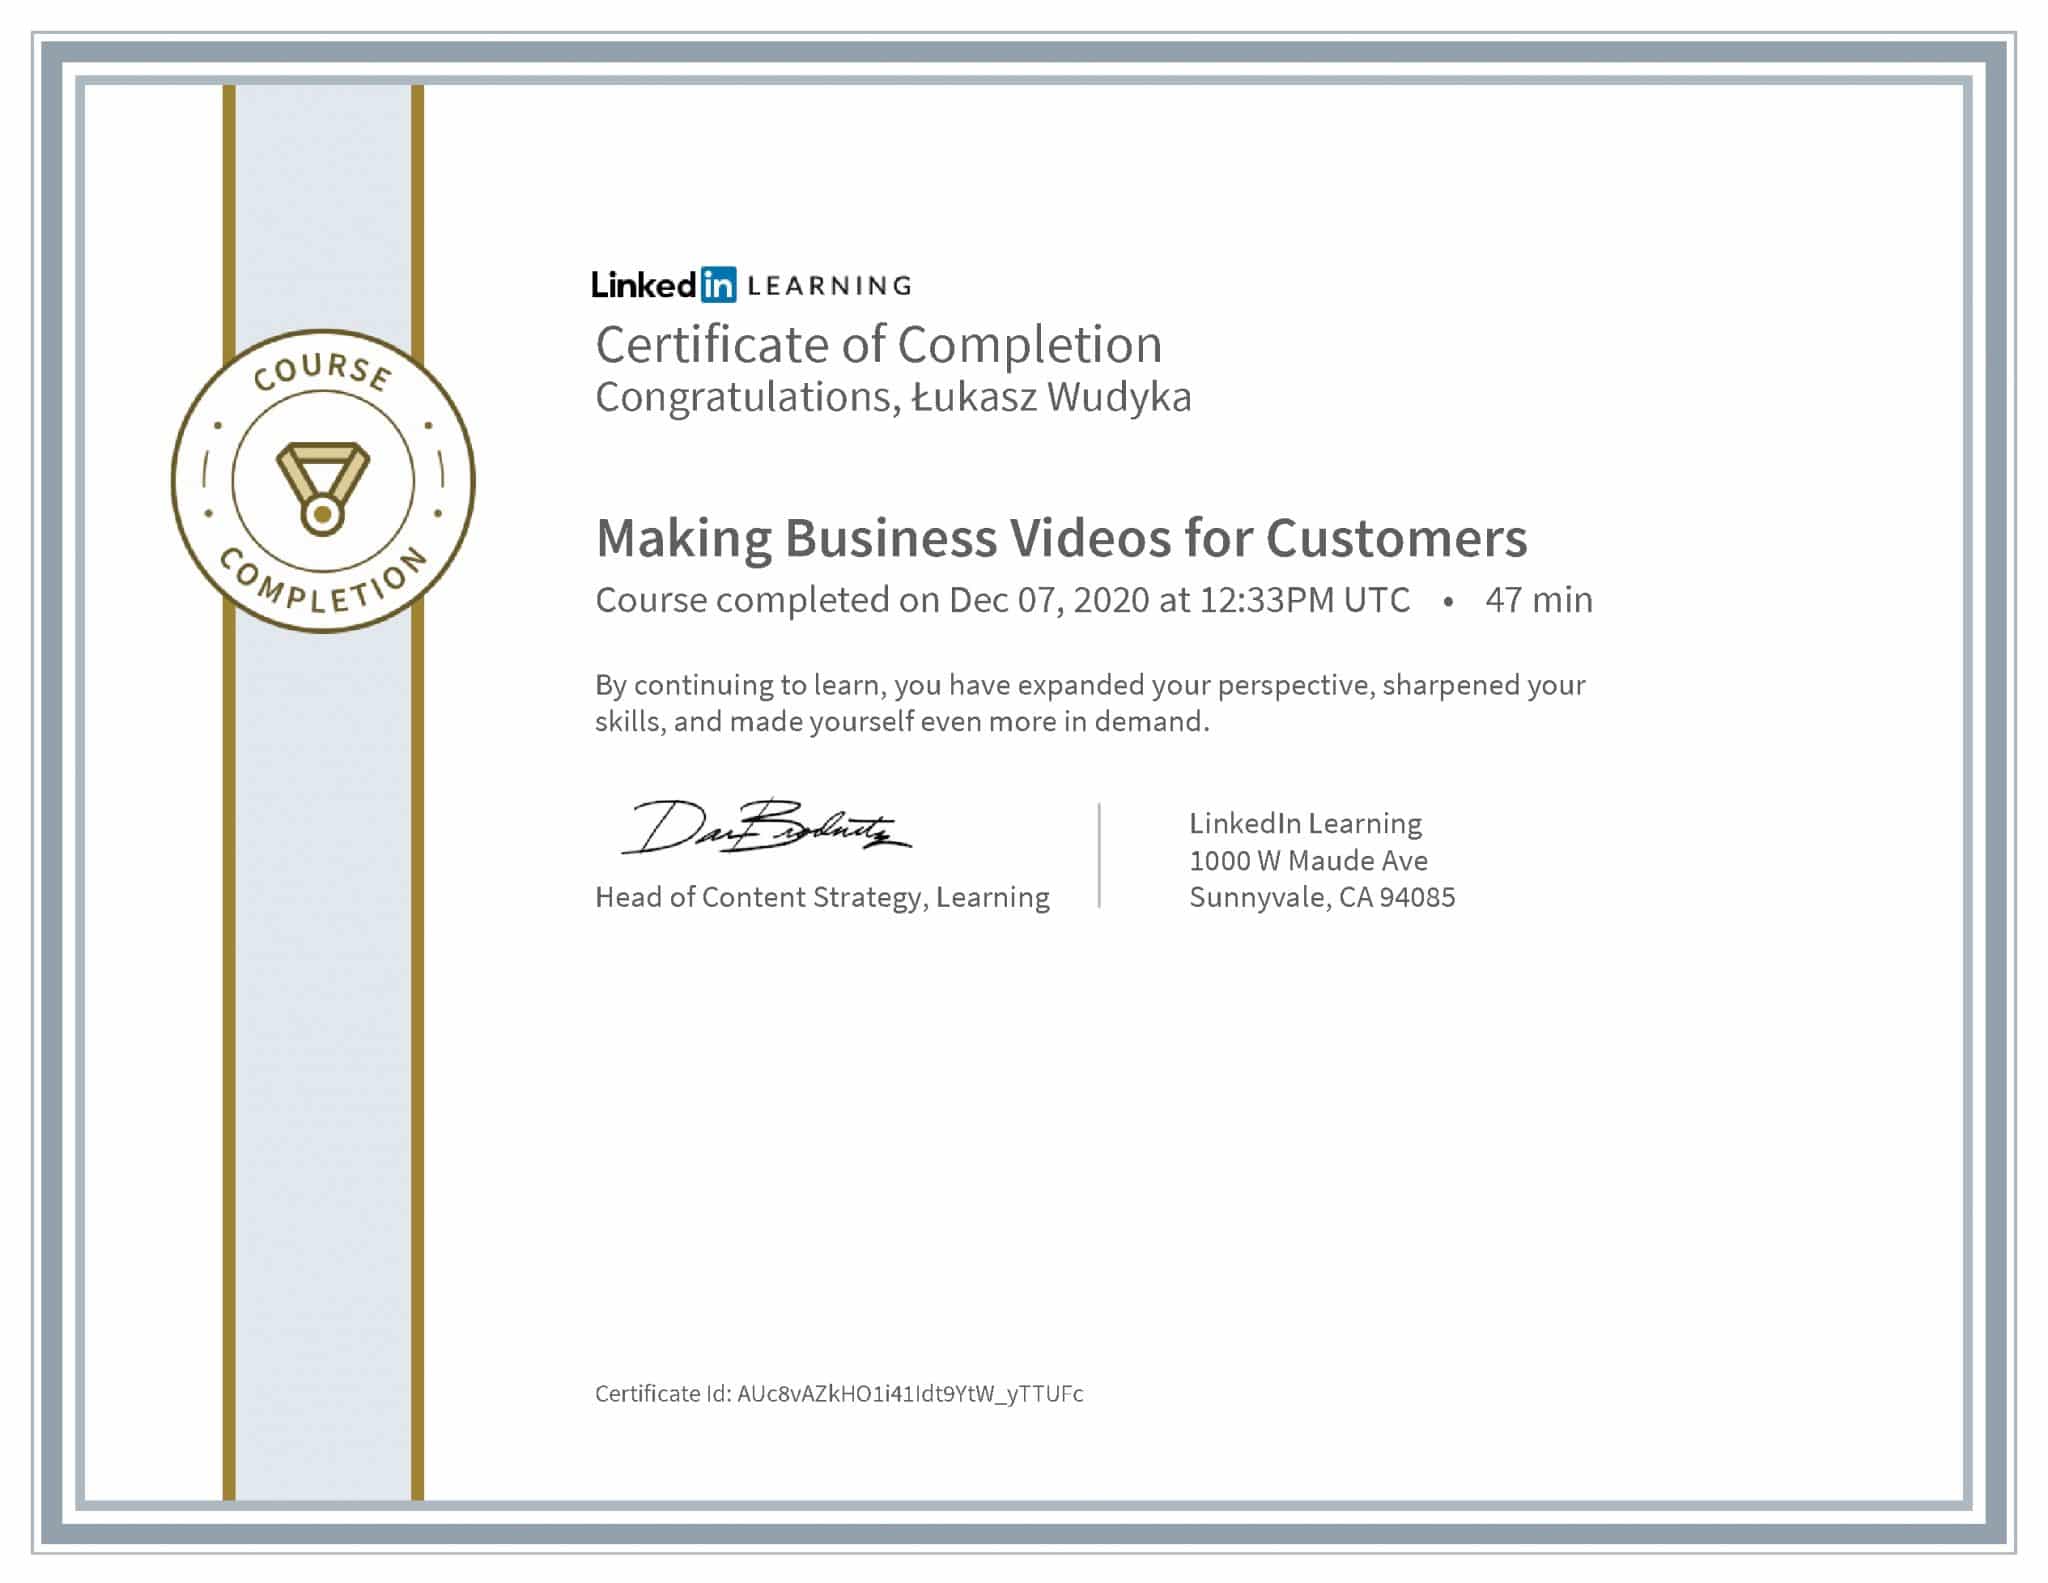 Łukasz Wudyka certyfikat LinkedIn Making Business Videos for Customers